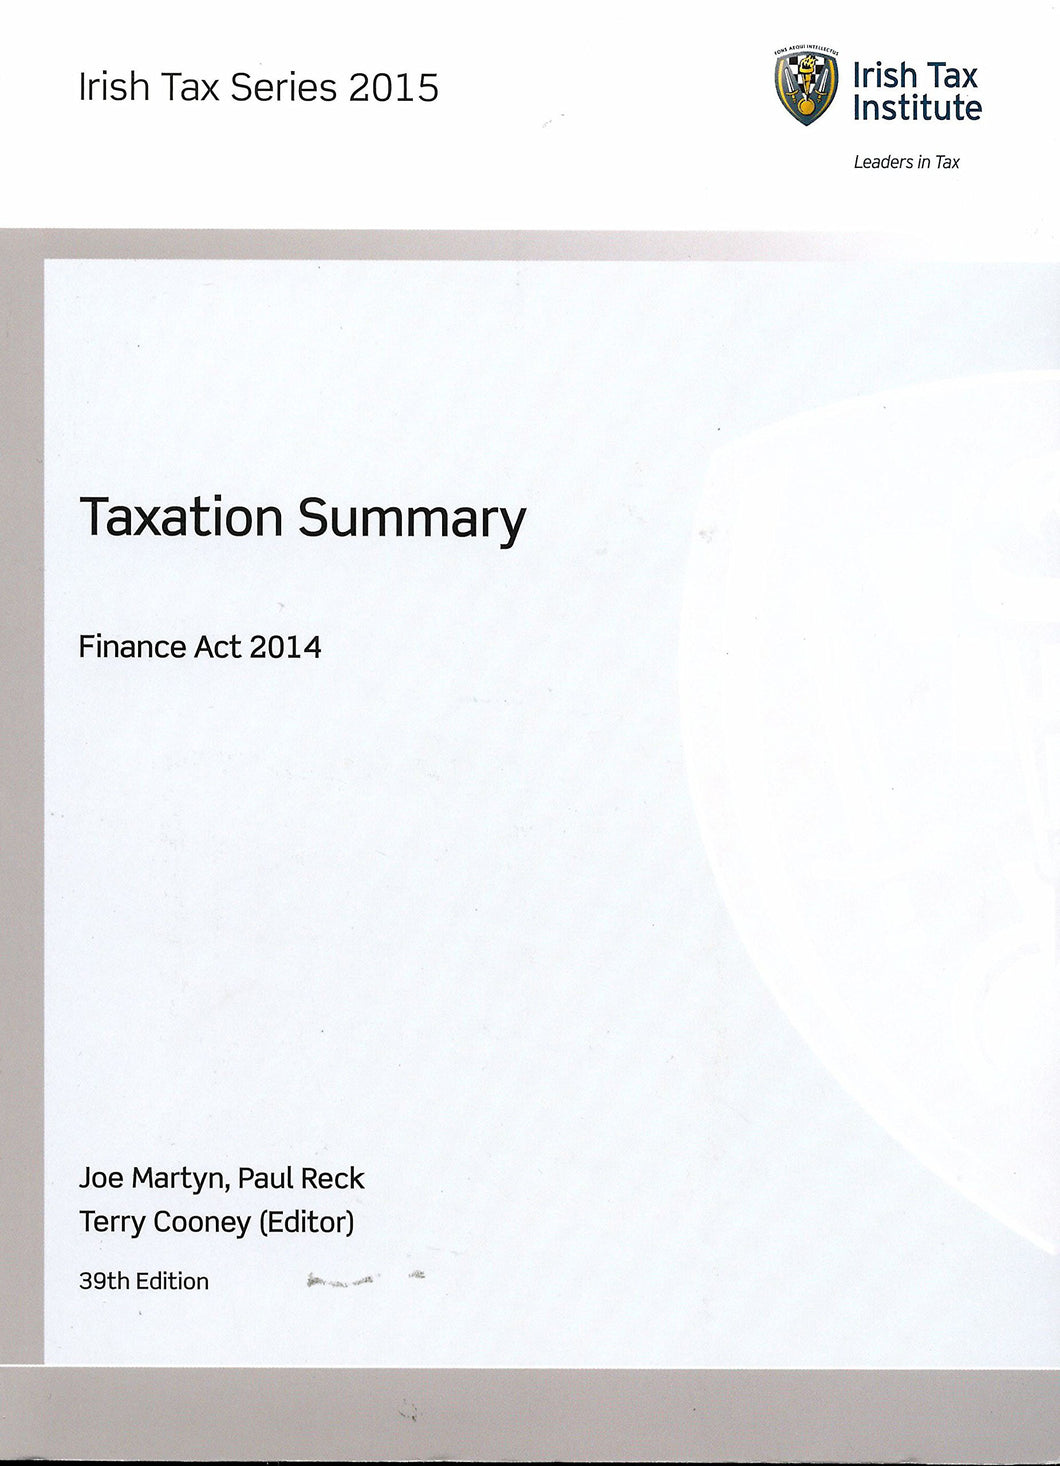 Taxation Summary: Finance Act 2014. Irish Tax Series 2015, 39th Edition